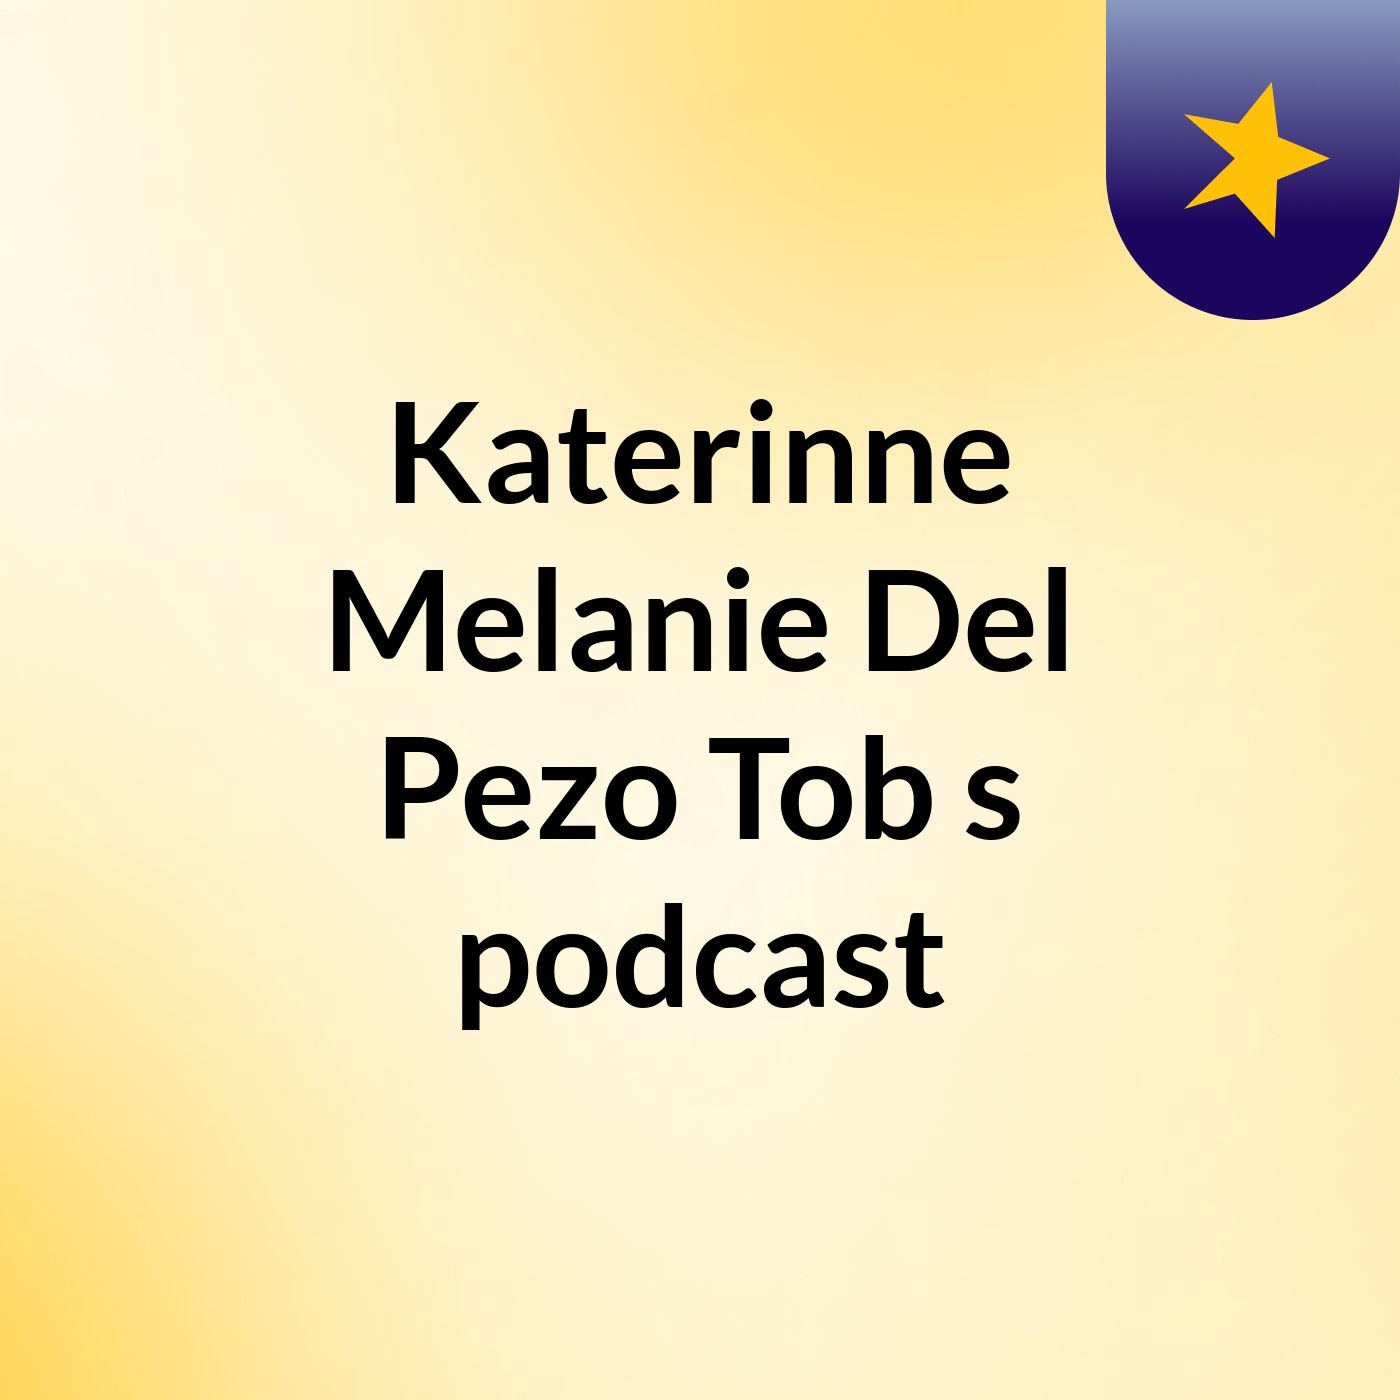 Episodio 4 - Katerinne Melanie Del Pezo Tob's podcast